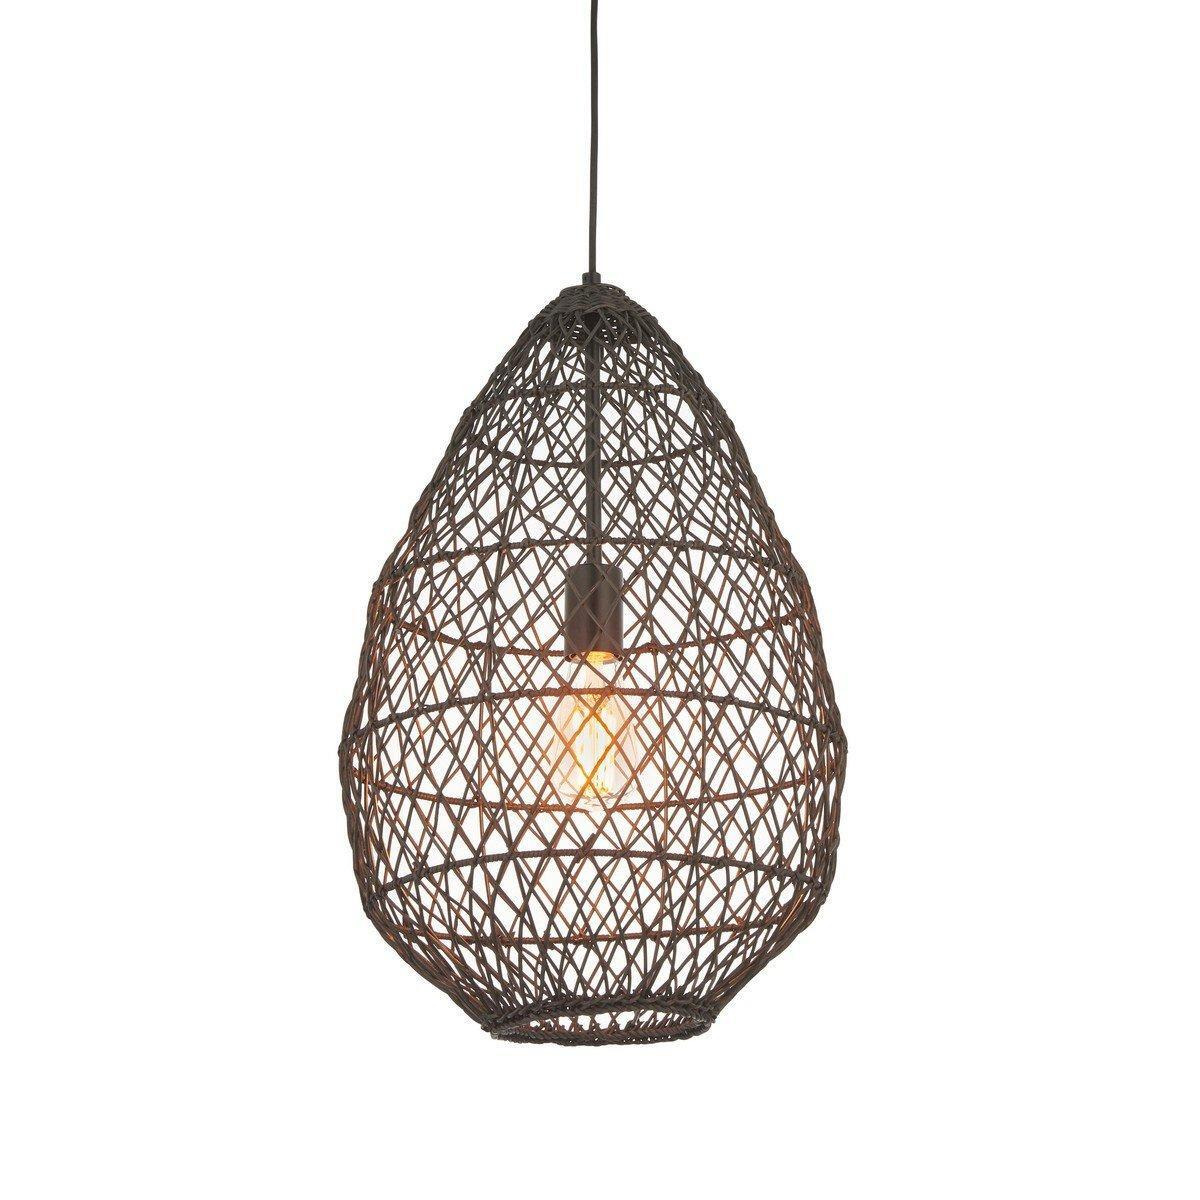 'ANCONA' Dimmable Stylish Indoor Rattan Single Pendant Ceiling Lamp - image 1